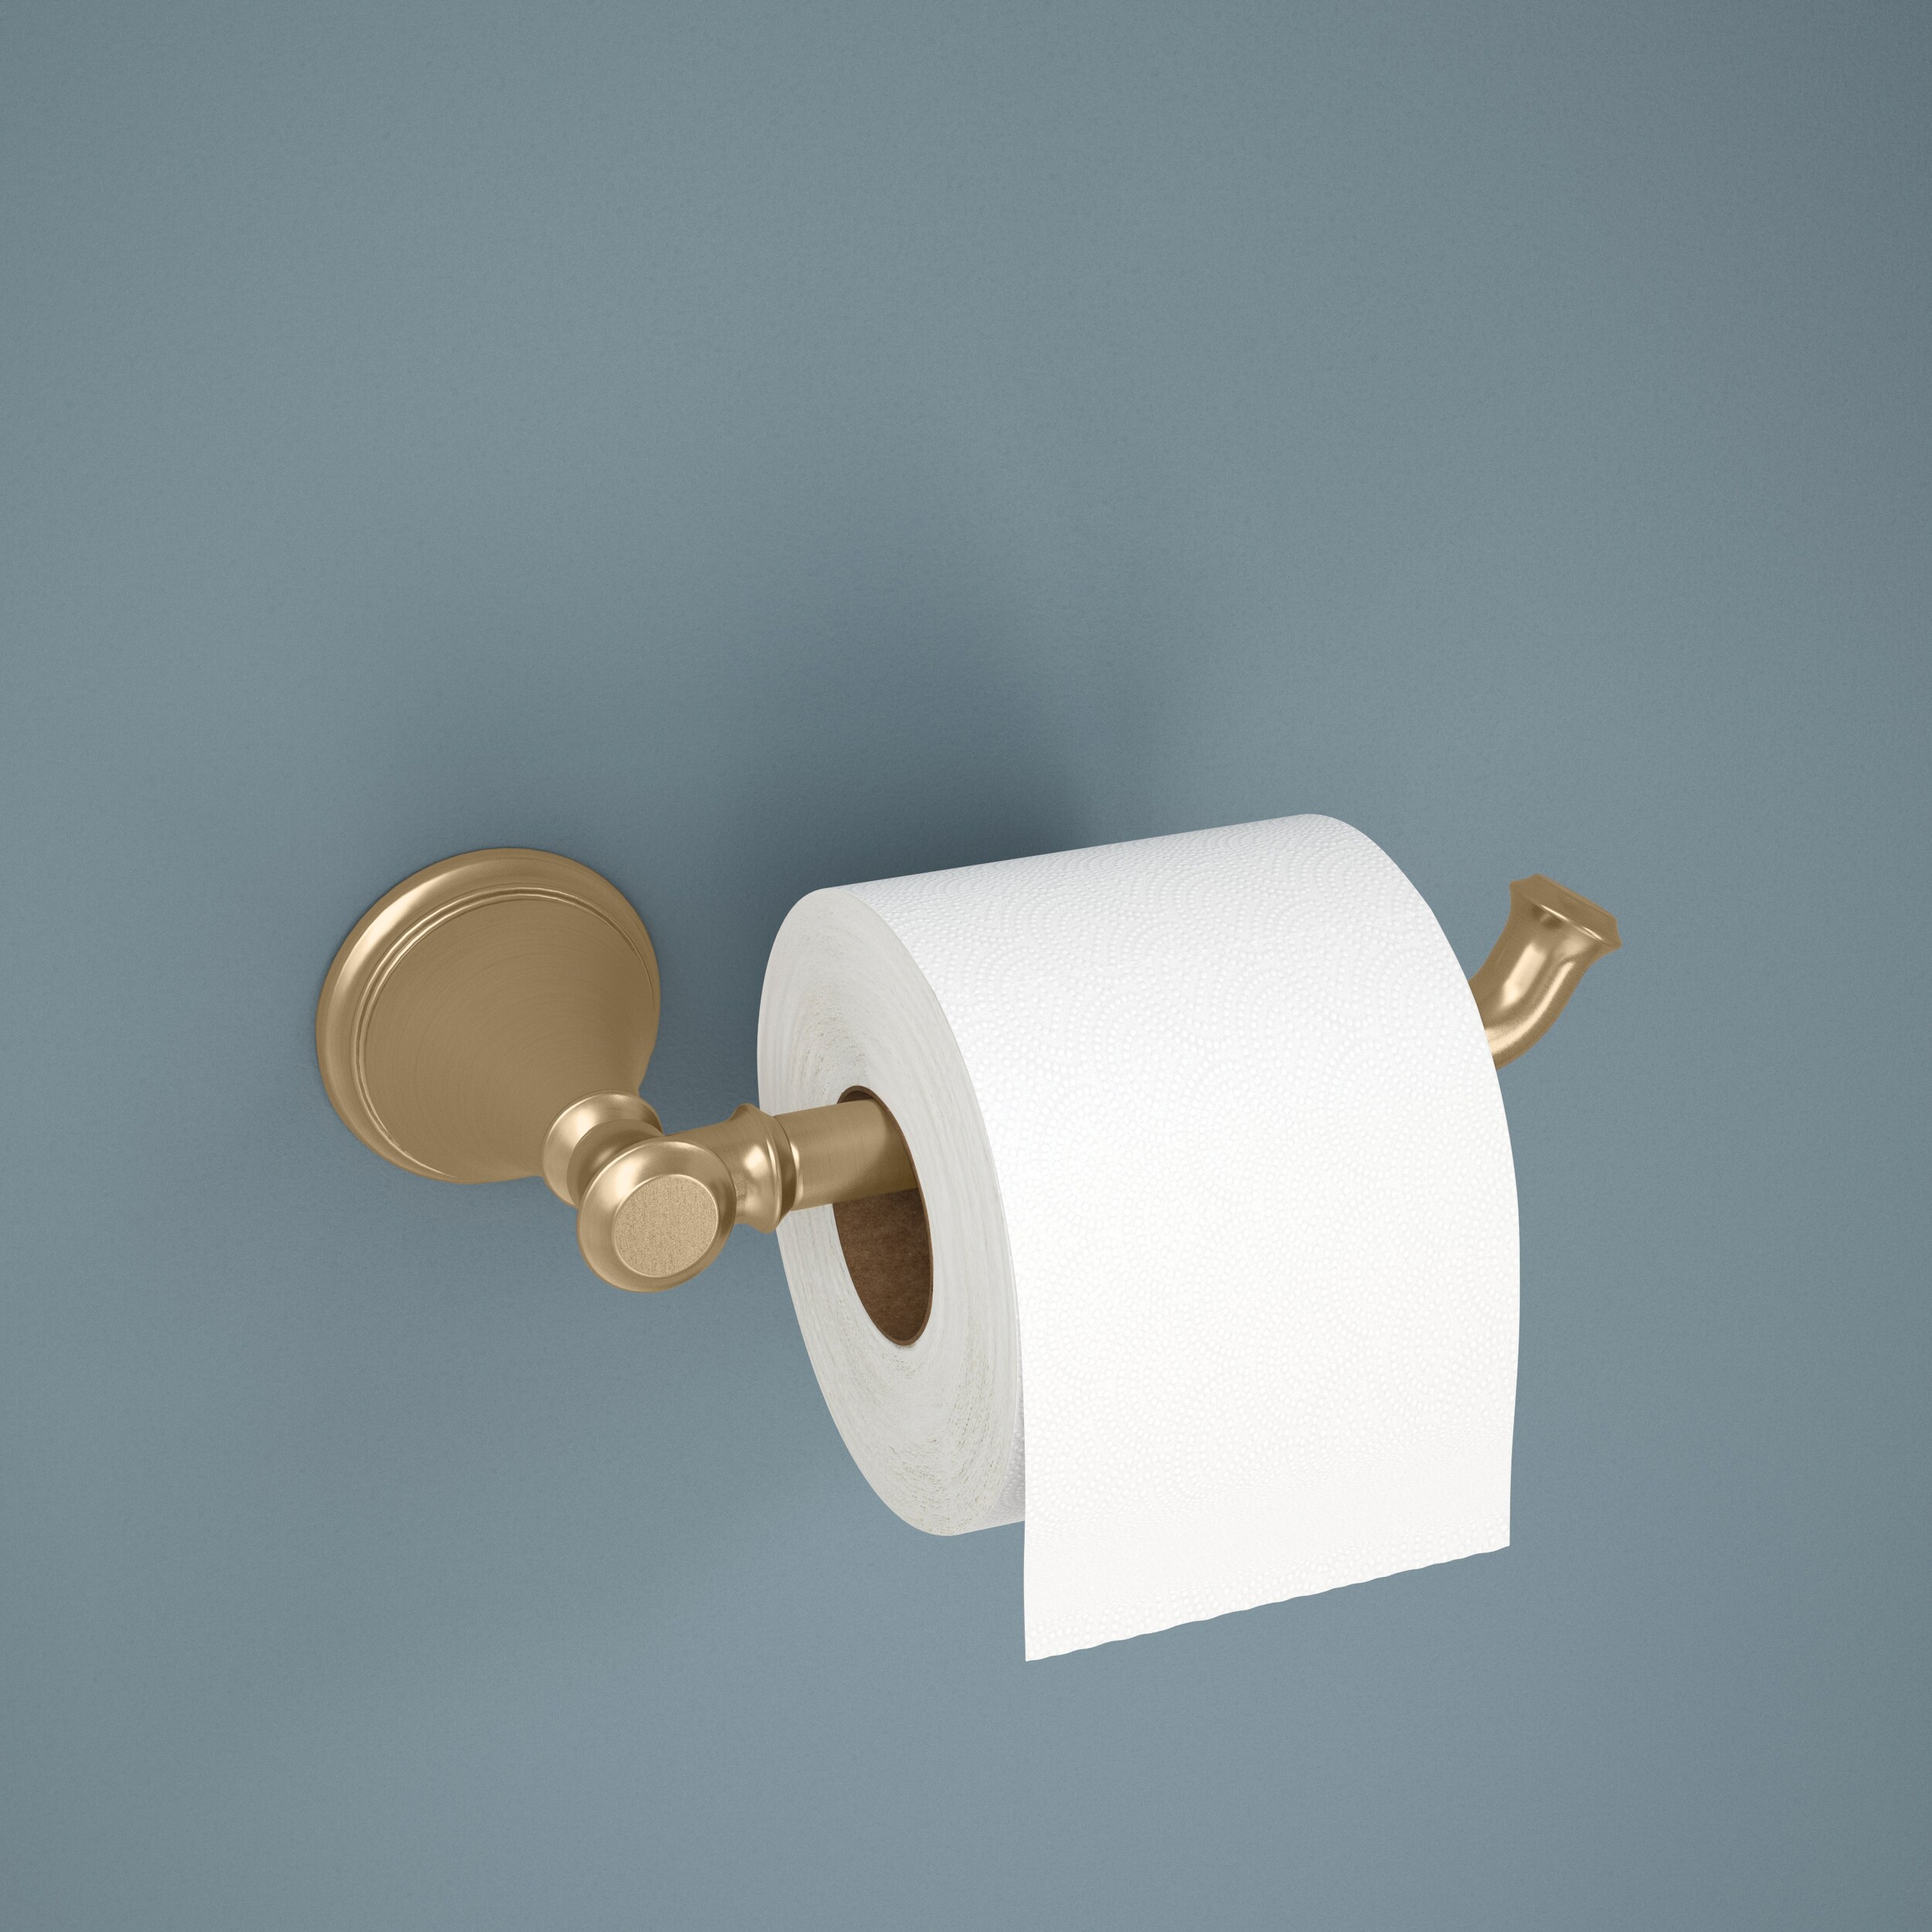 Cataloria Metal Toilet Paper Holder Stand